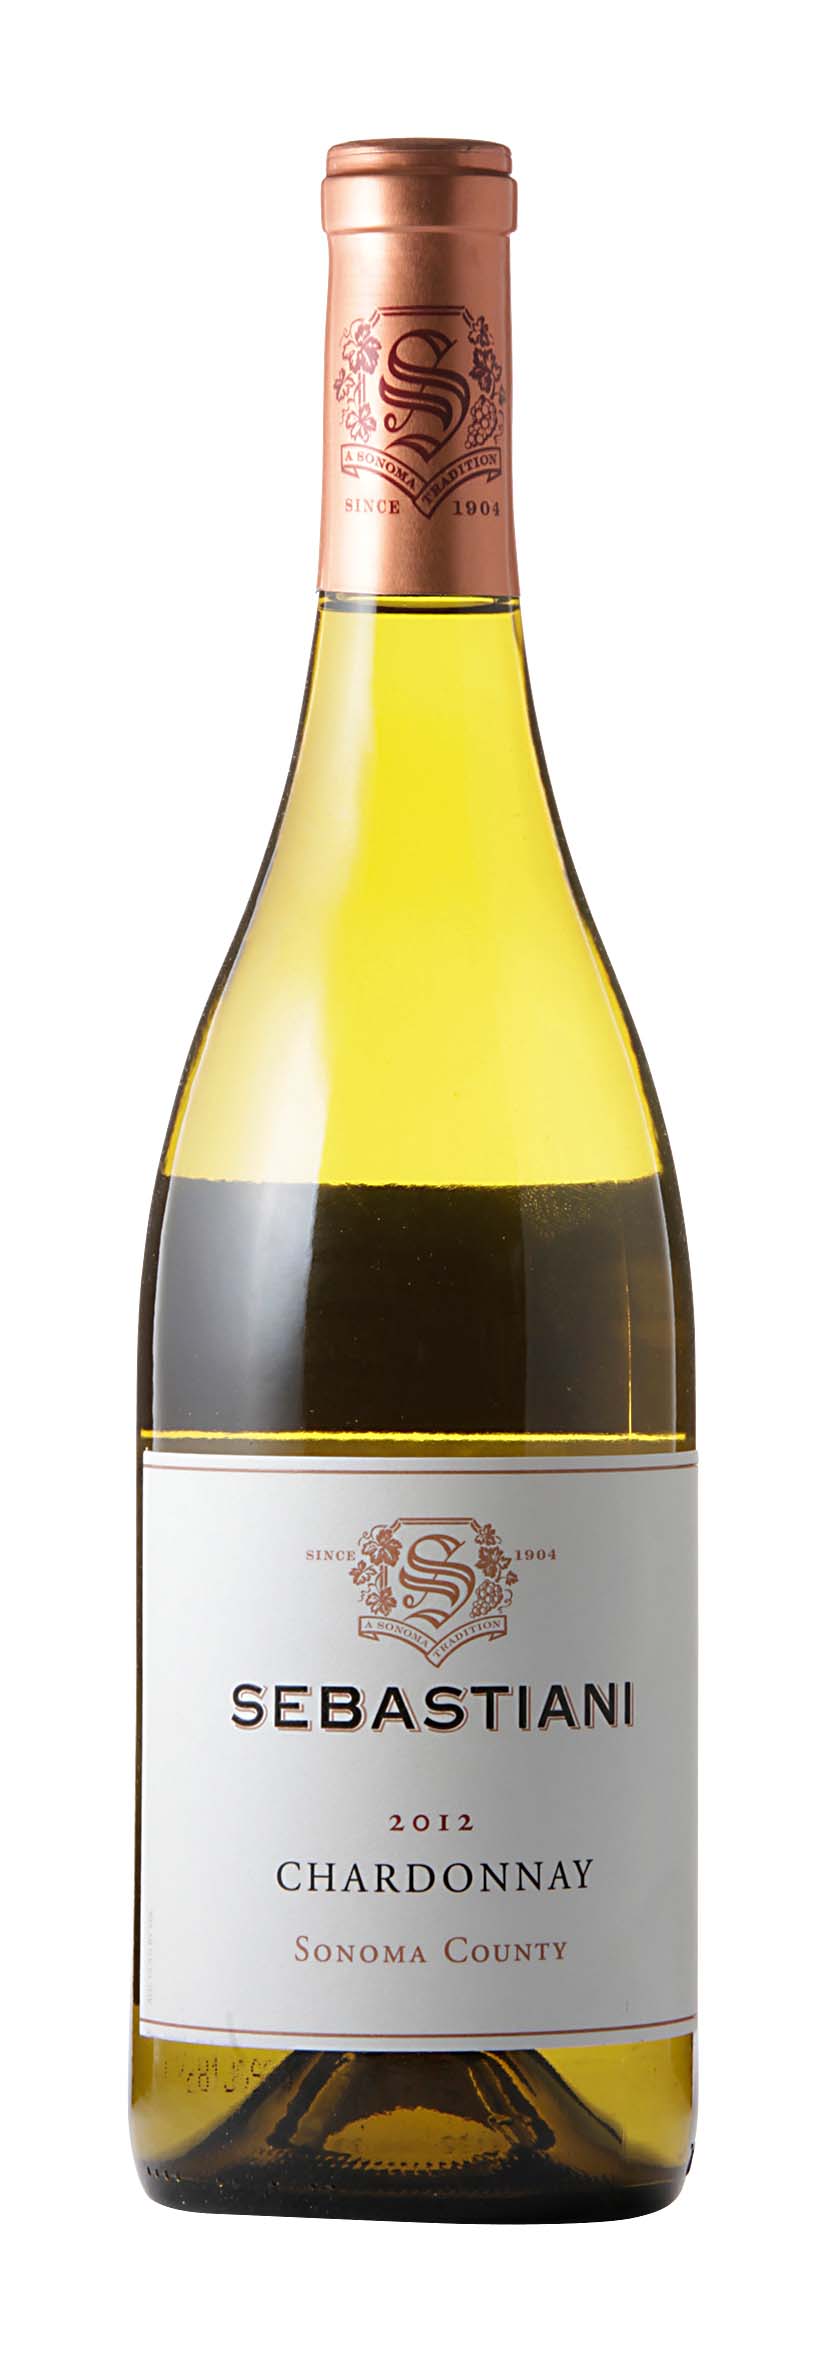 Sonoma County Chardonnay 2012